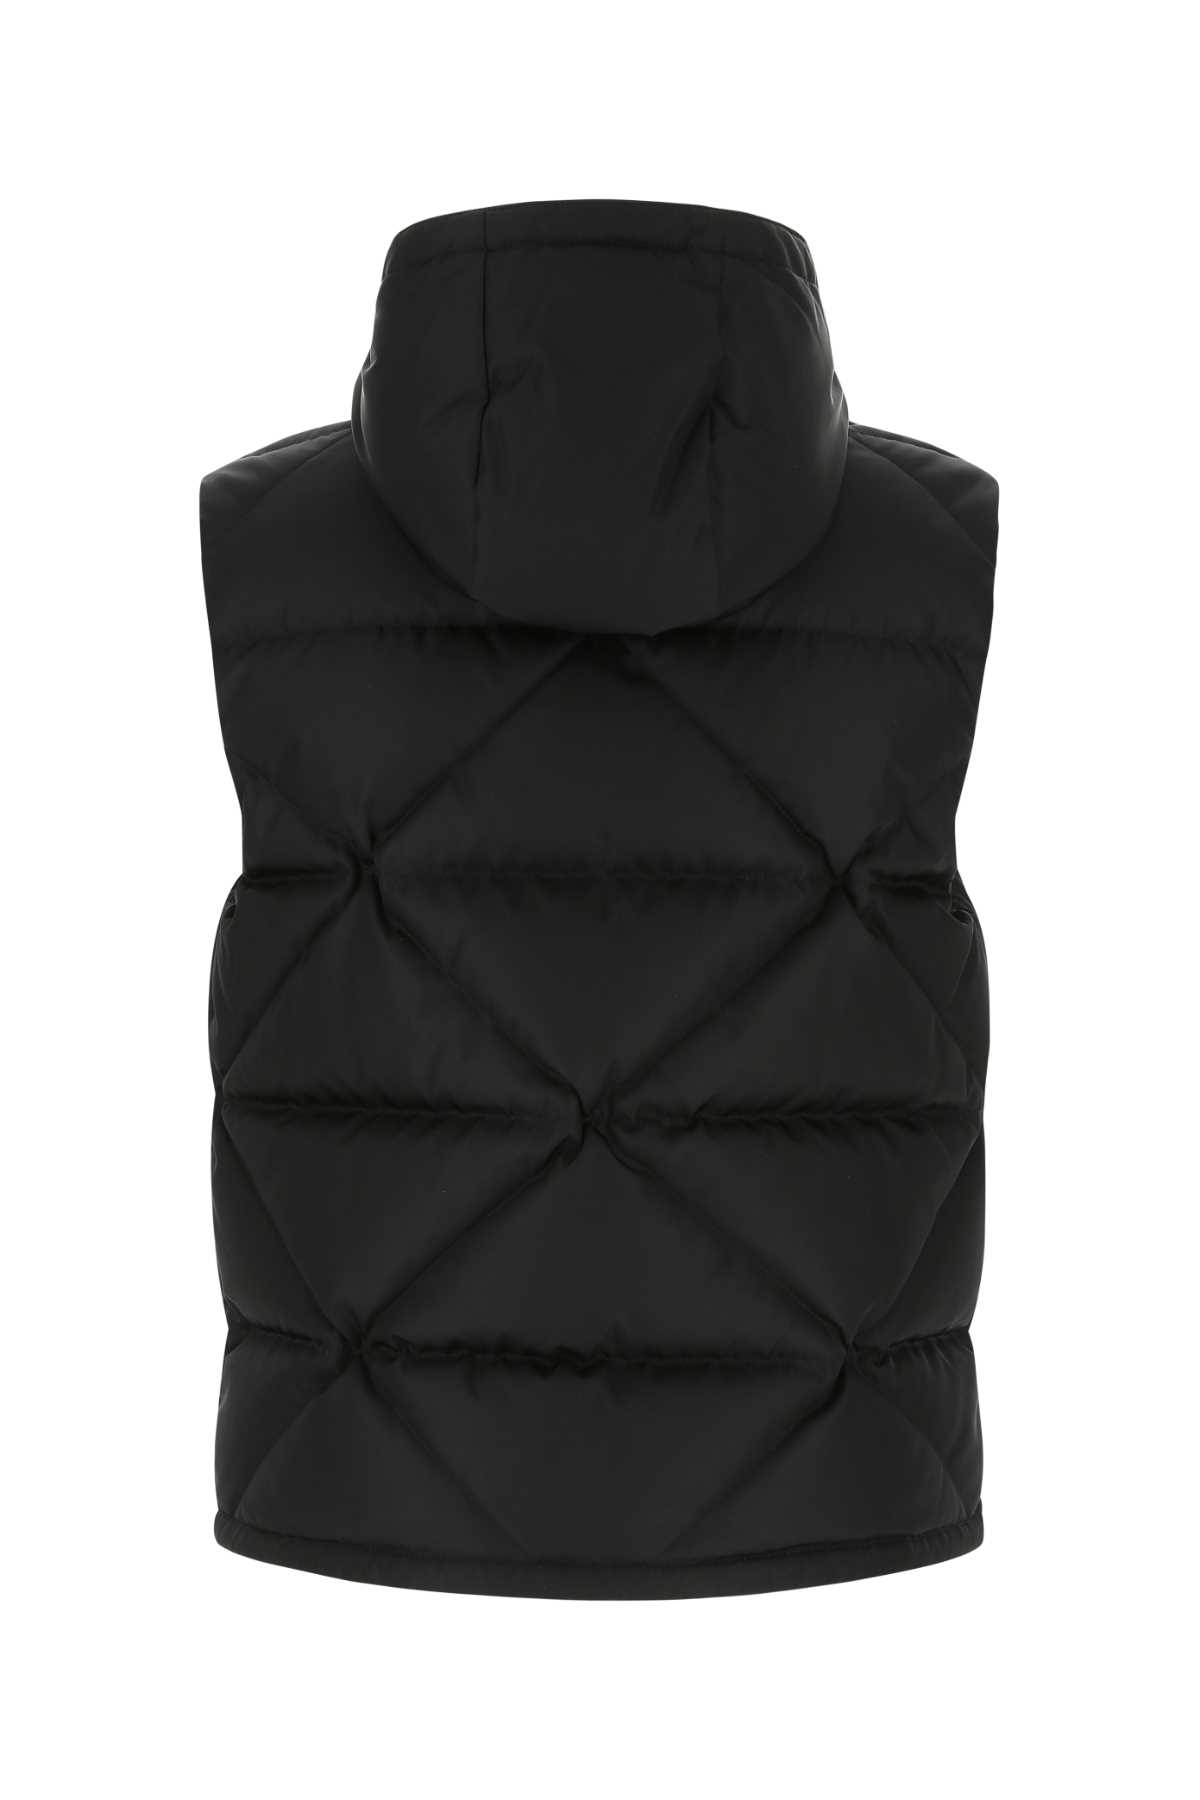 Prada Black Re-nylon Sleeveless Down Jacket In F0002